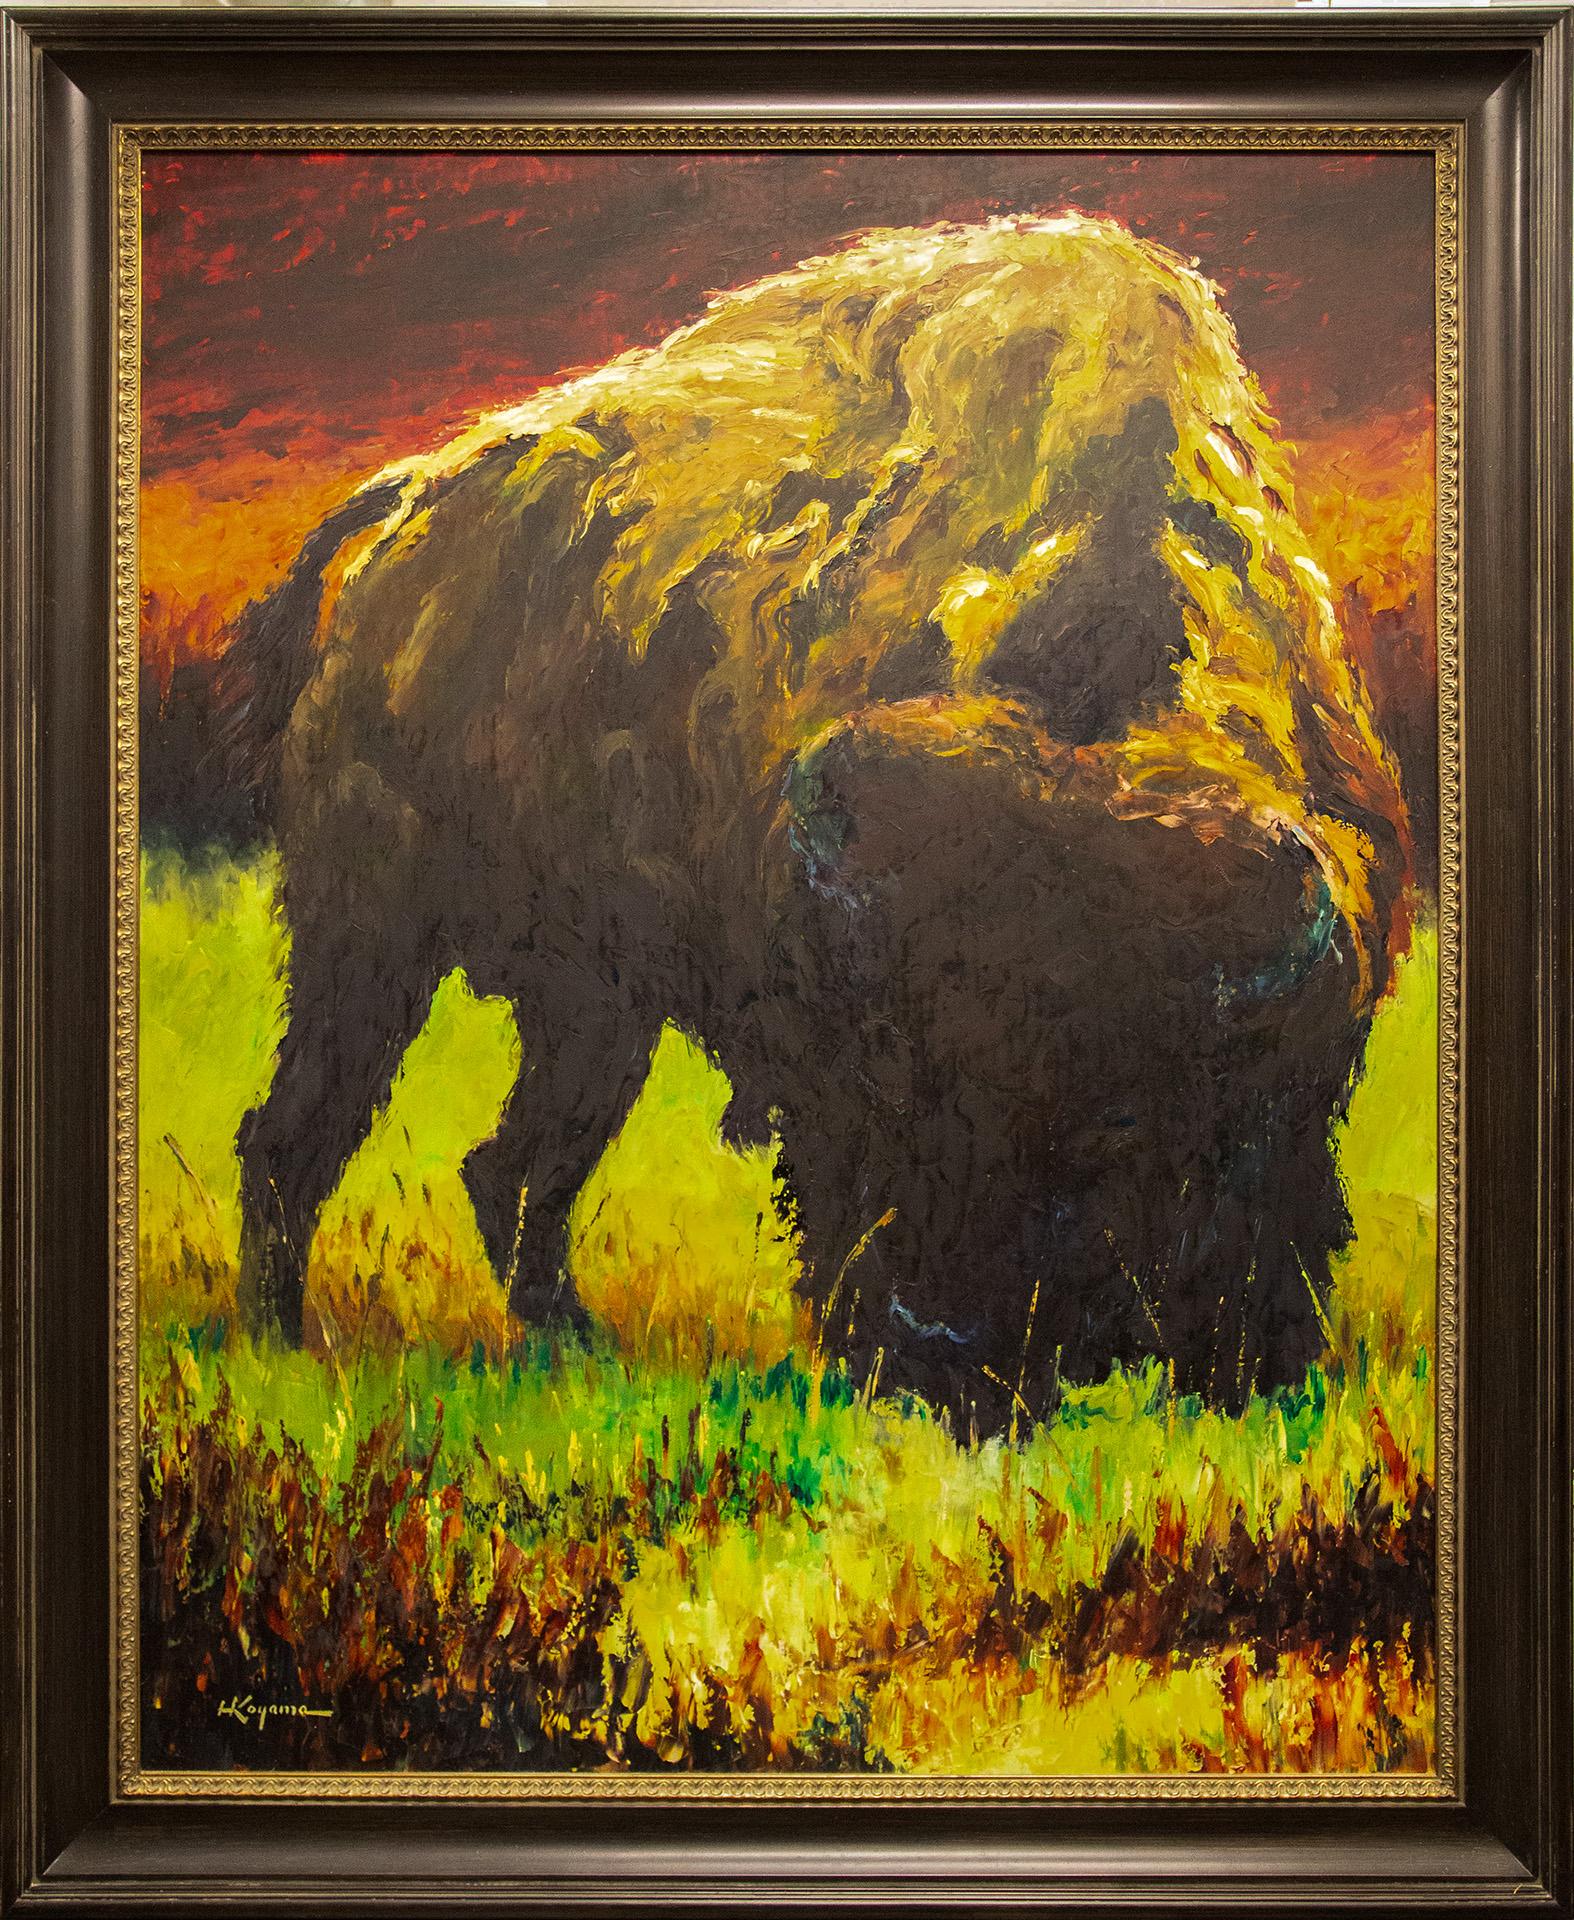 Harry Koyama Animal Painting - Late Day Bison, Wildlife Impressionist Oil Painting on Panel, Western Art